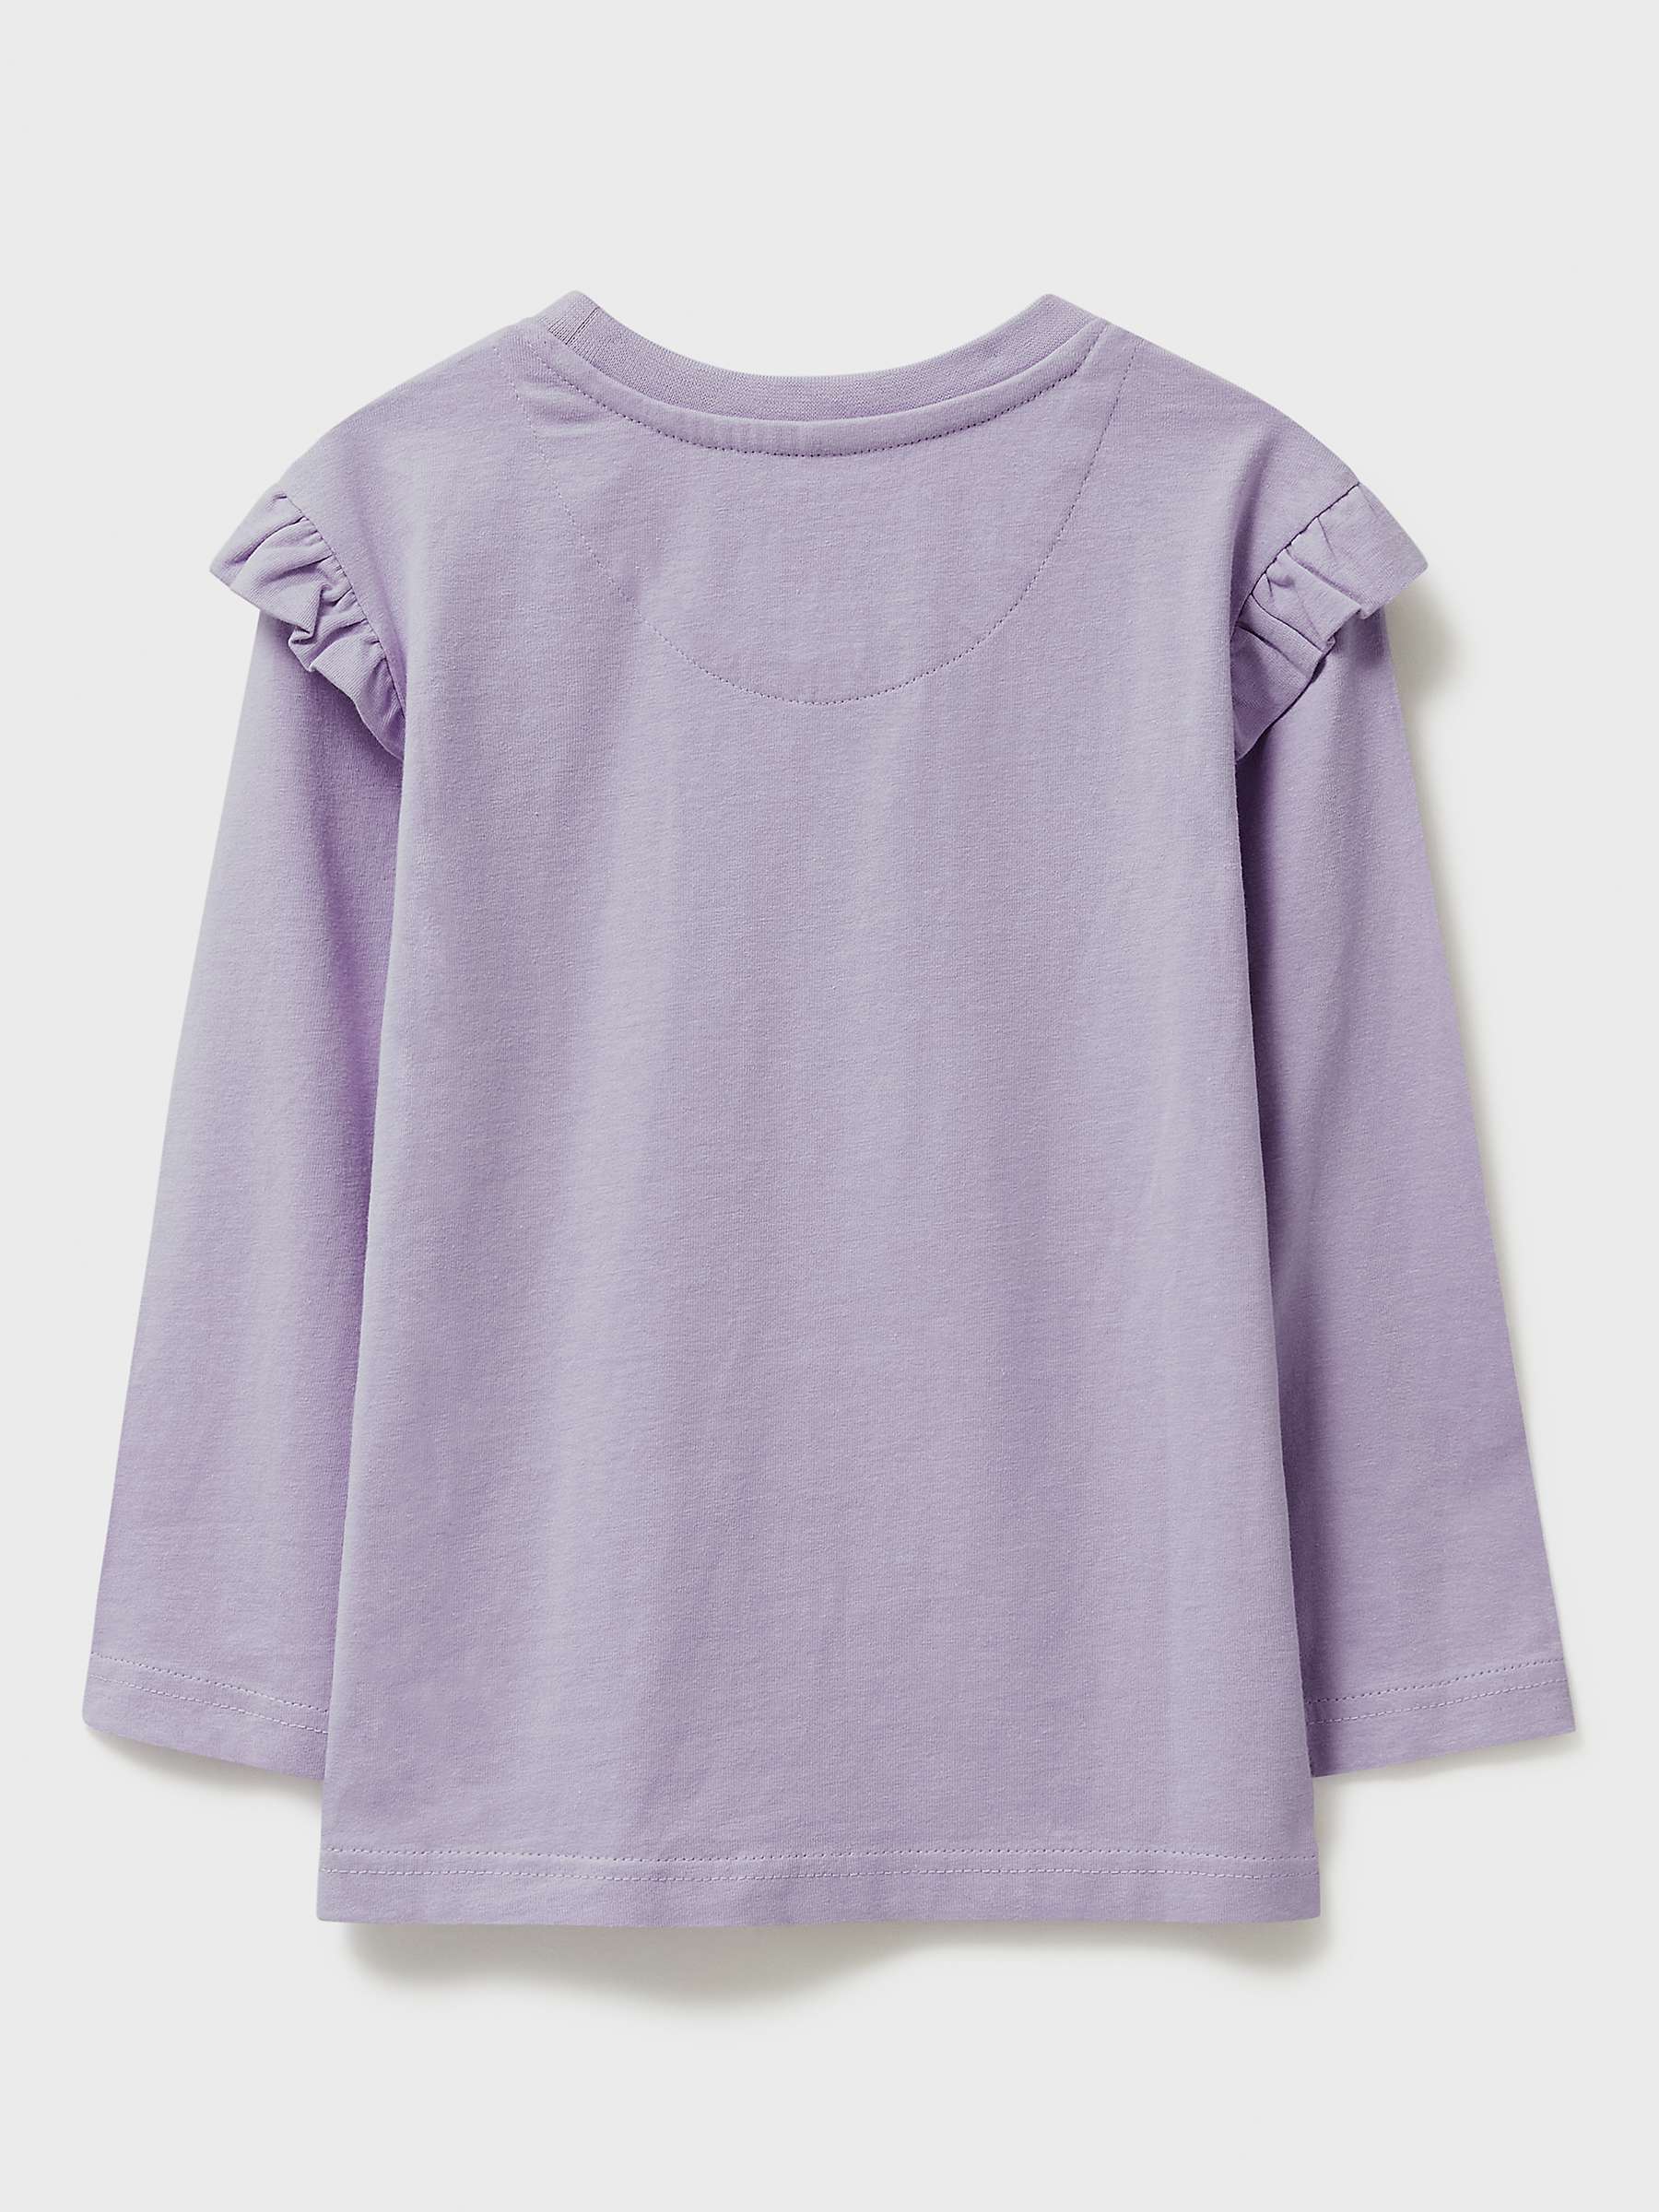 Buy Crew Clothing Kids' Starburst Graphic Long Sleeve Top, Lilac/Multi Online at johnlewis.com